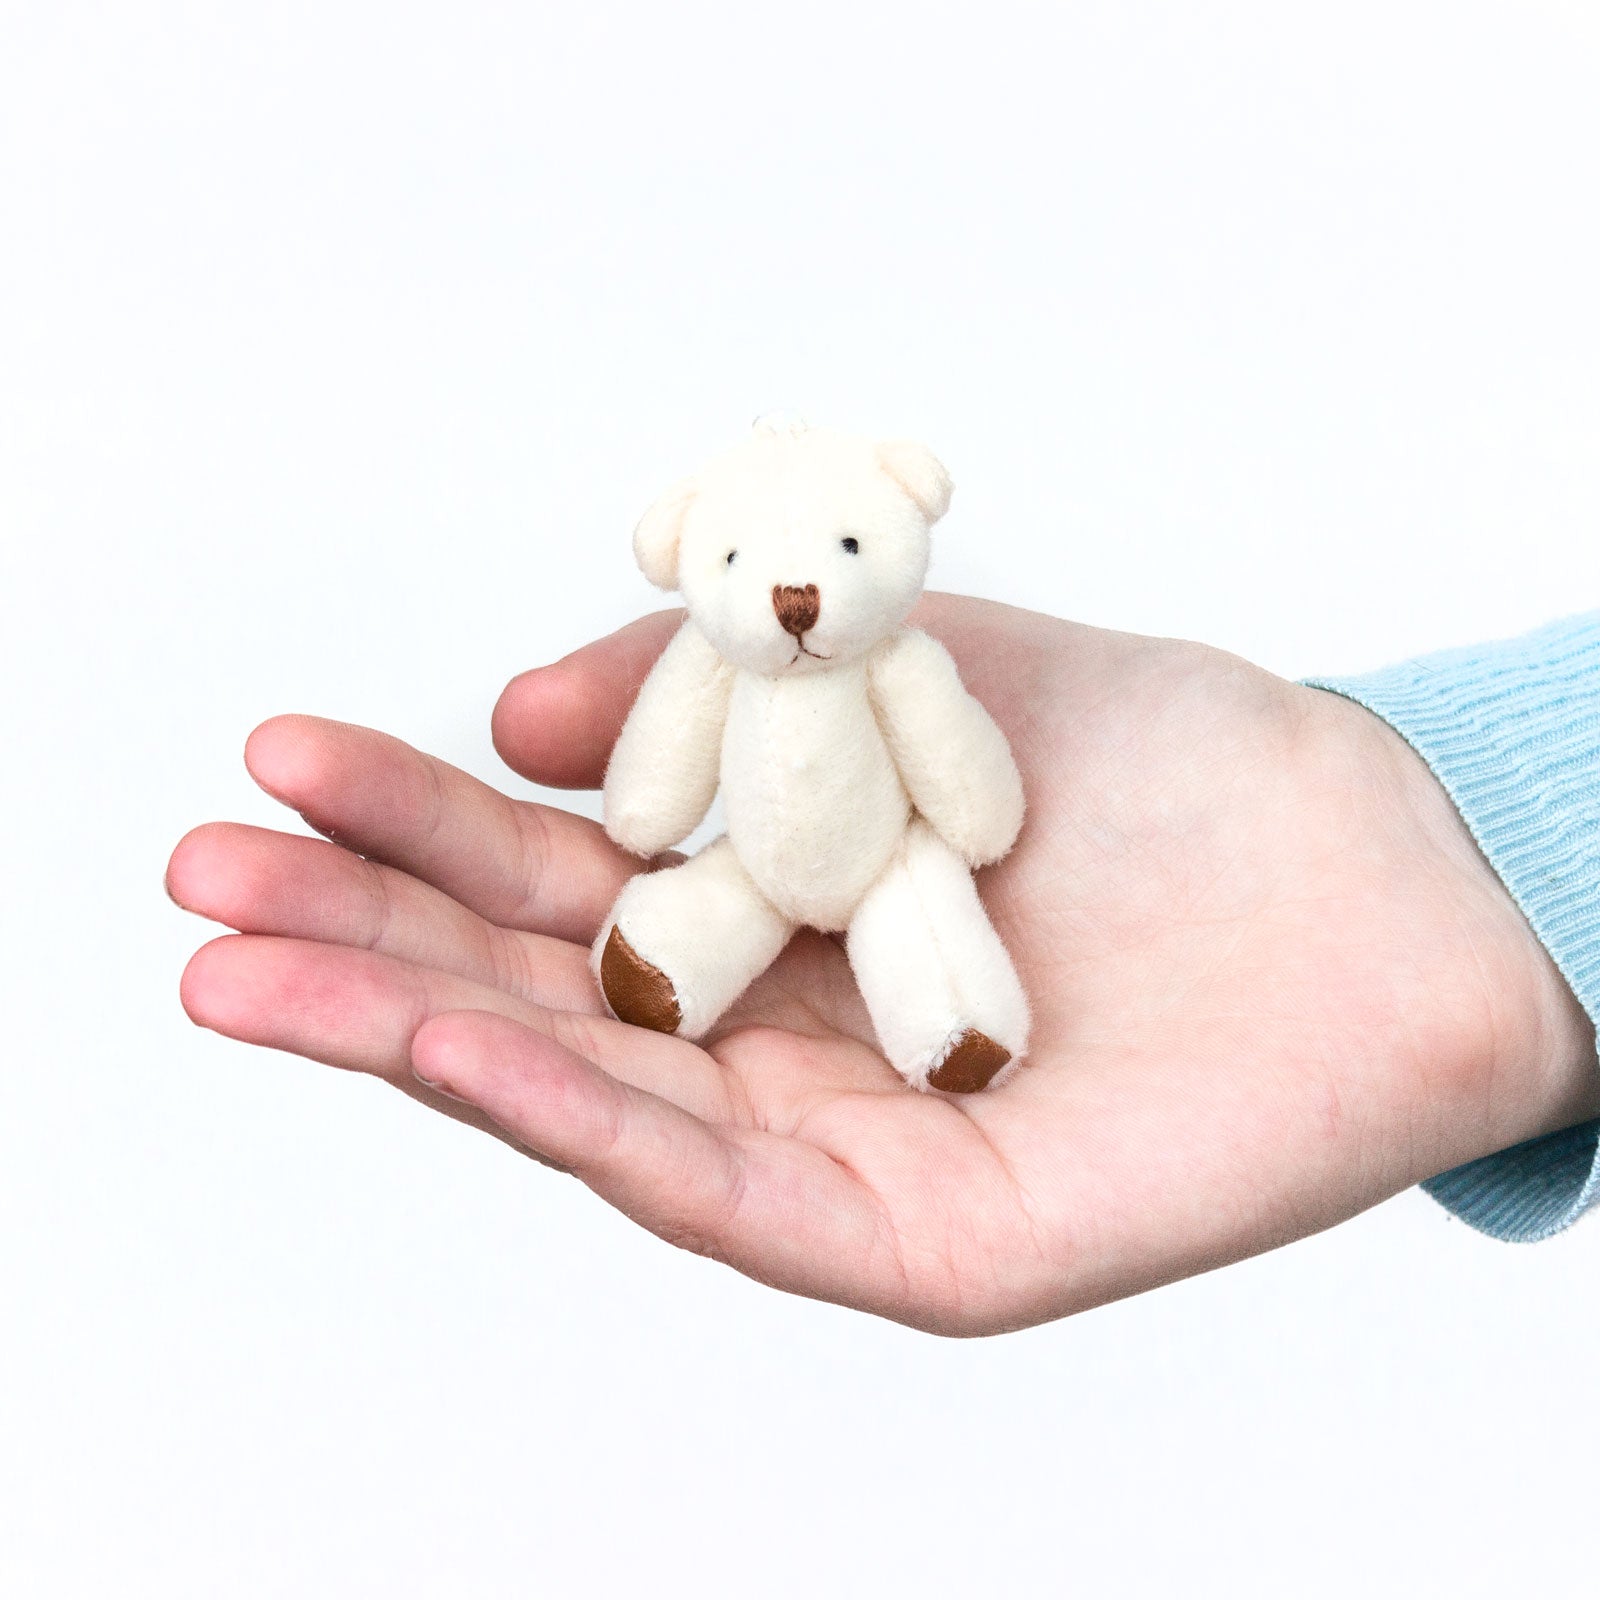 Small WHITE Teddy Bears X 40 - Cute Soft Adorable